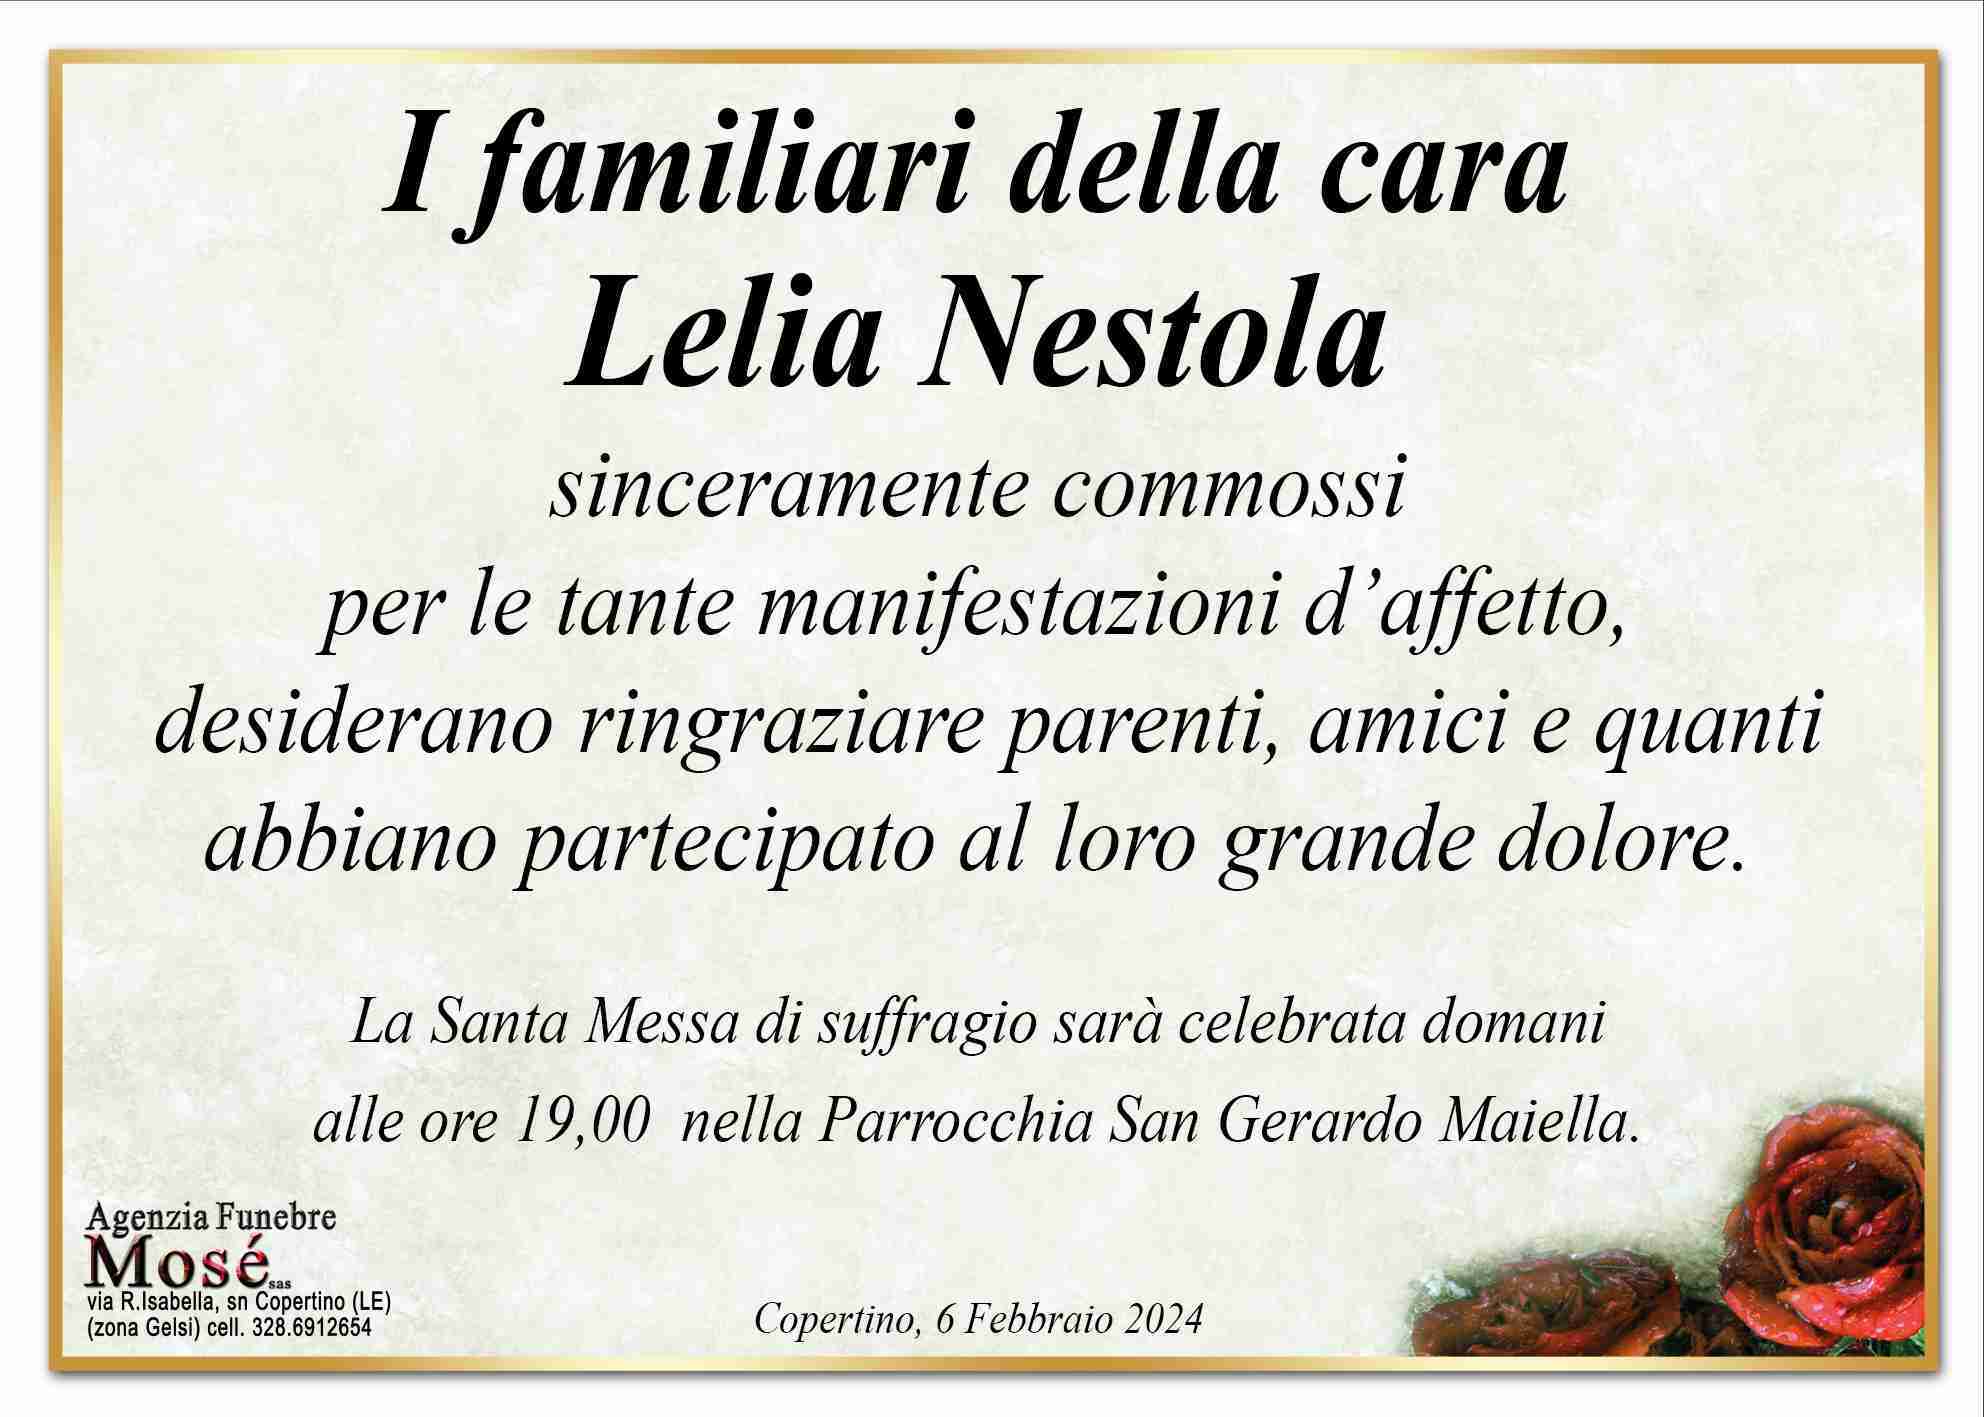 Nestola Lelia